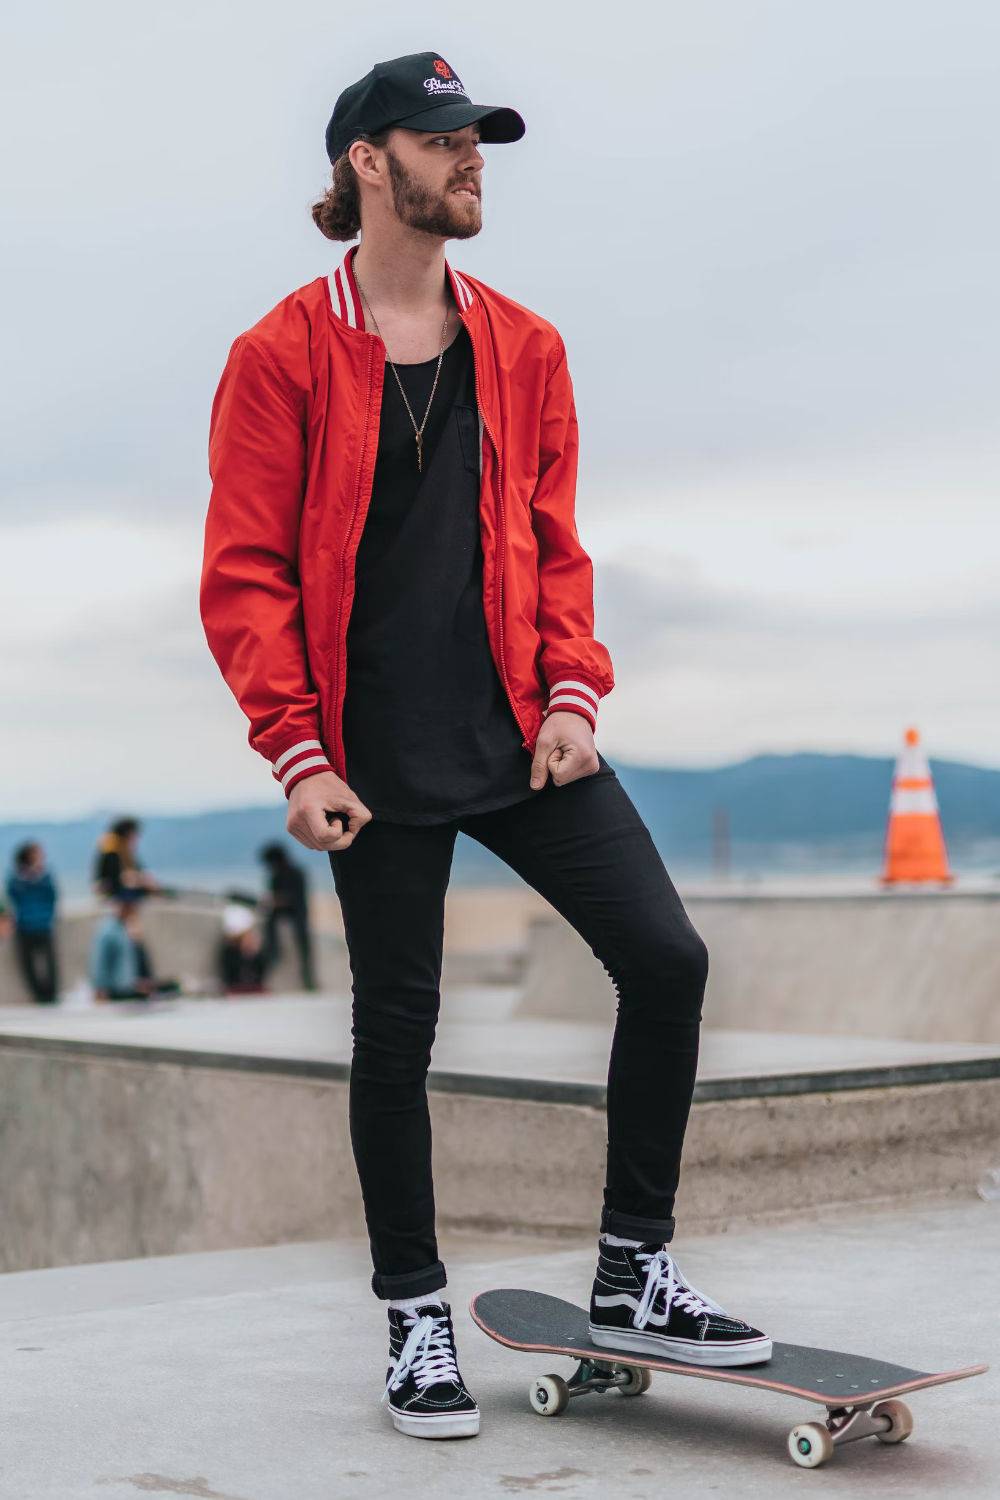 types clothing styles guys skate